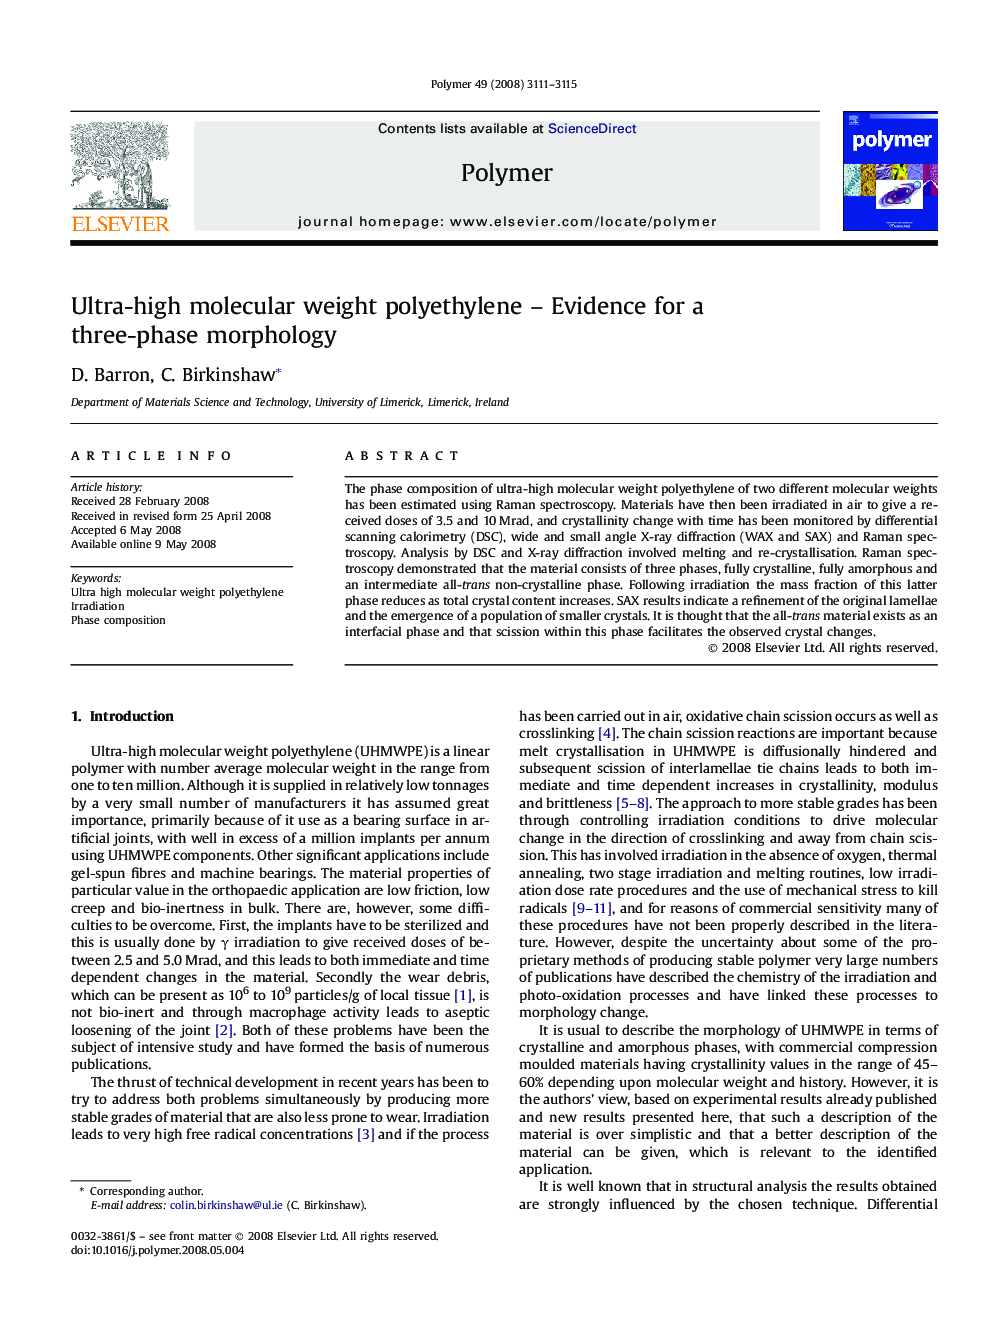 Ultra-high molecular weight polyethylene - Evidence for a three-phase morphology